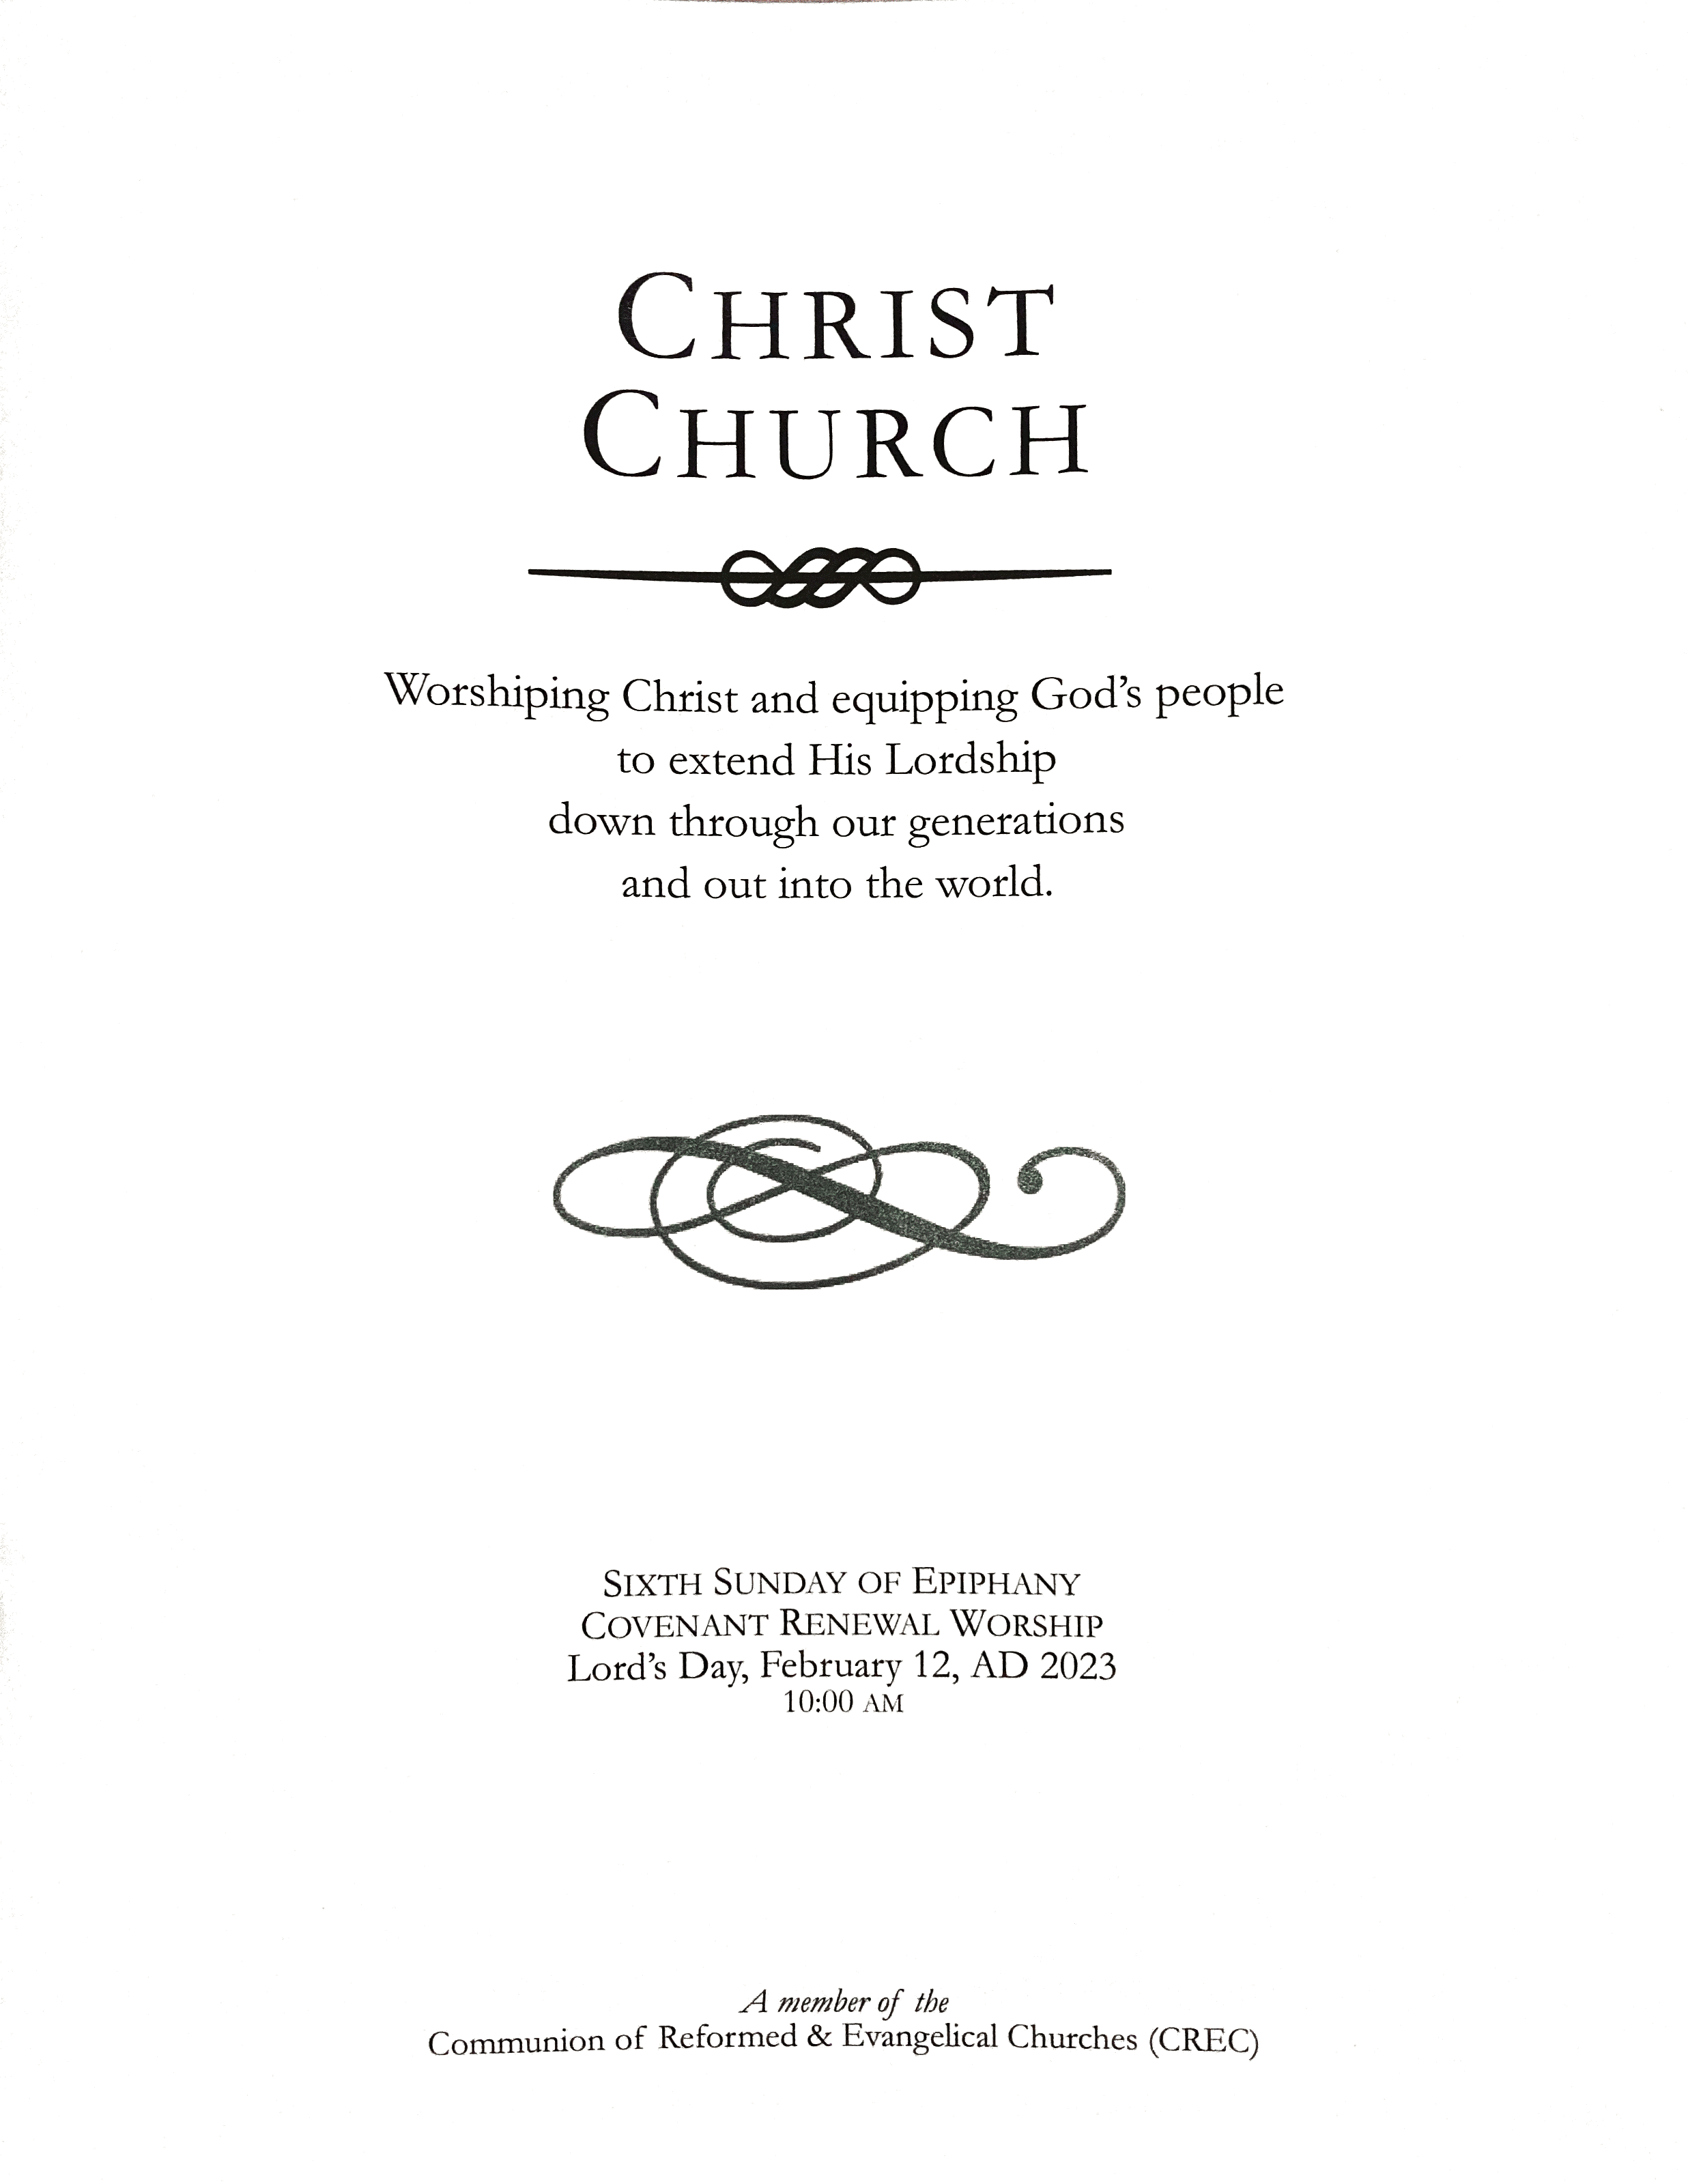 Christ Church, Branch Cove, Odenville, Birmingham, Reformed, Evangelical, Liturgy